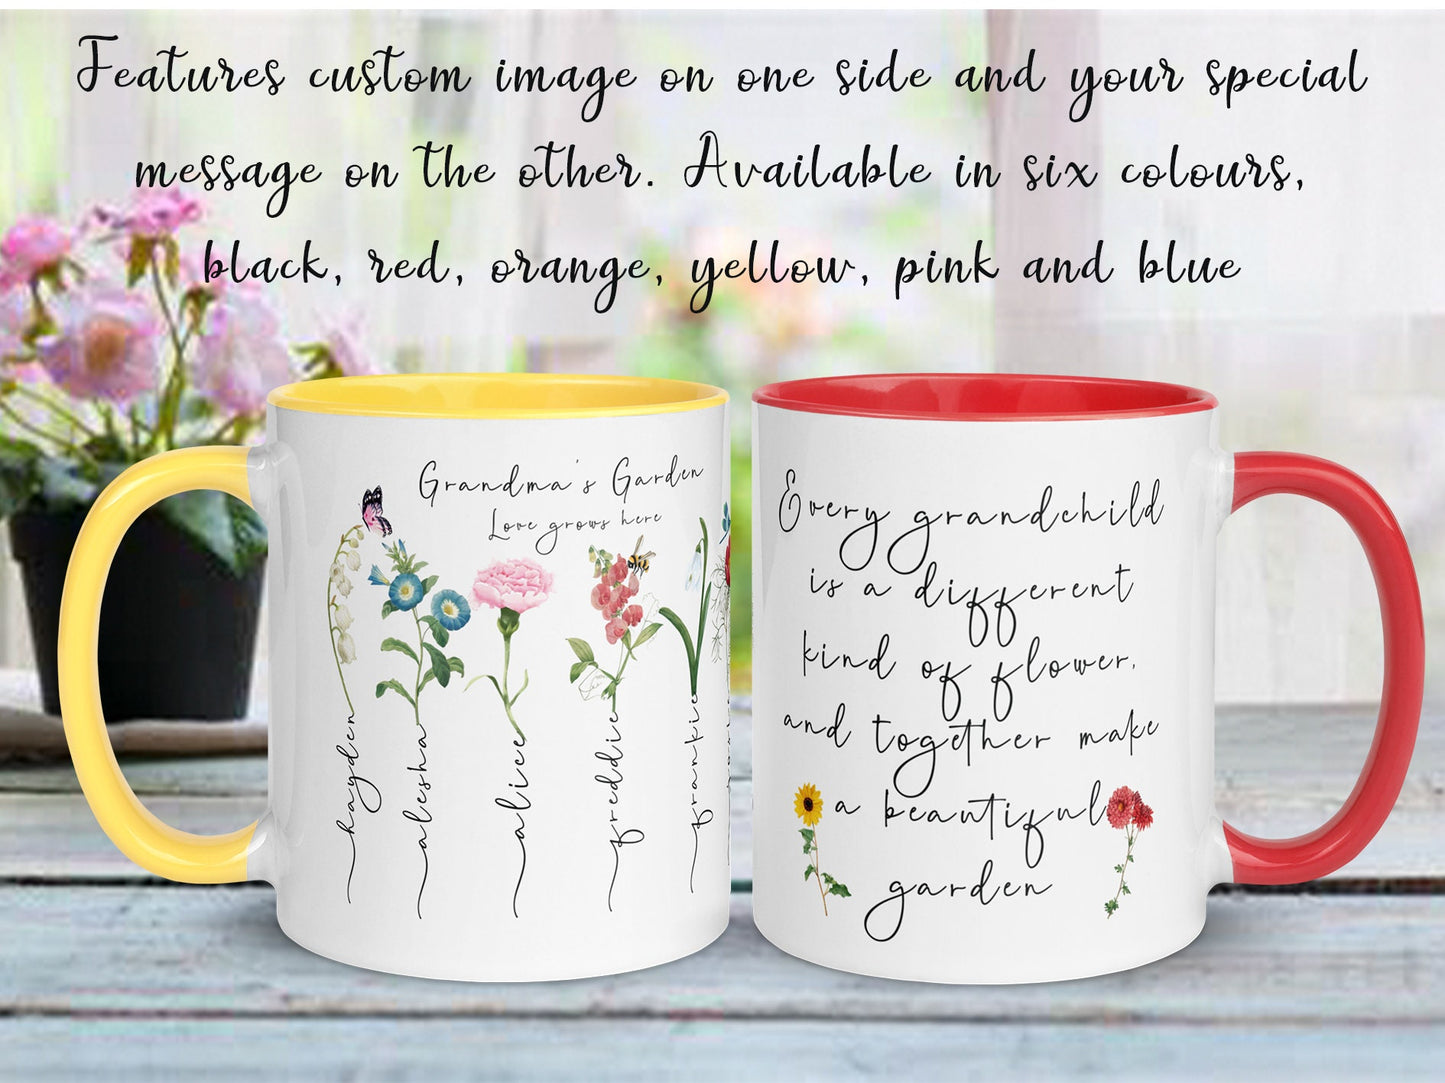 Nannas garden mug and coaster set with red, yellow, orange, blue, pink or black colour inside